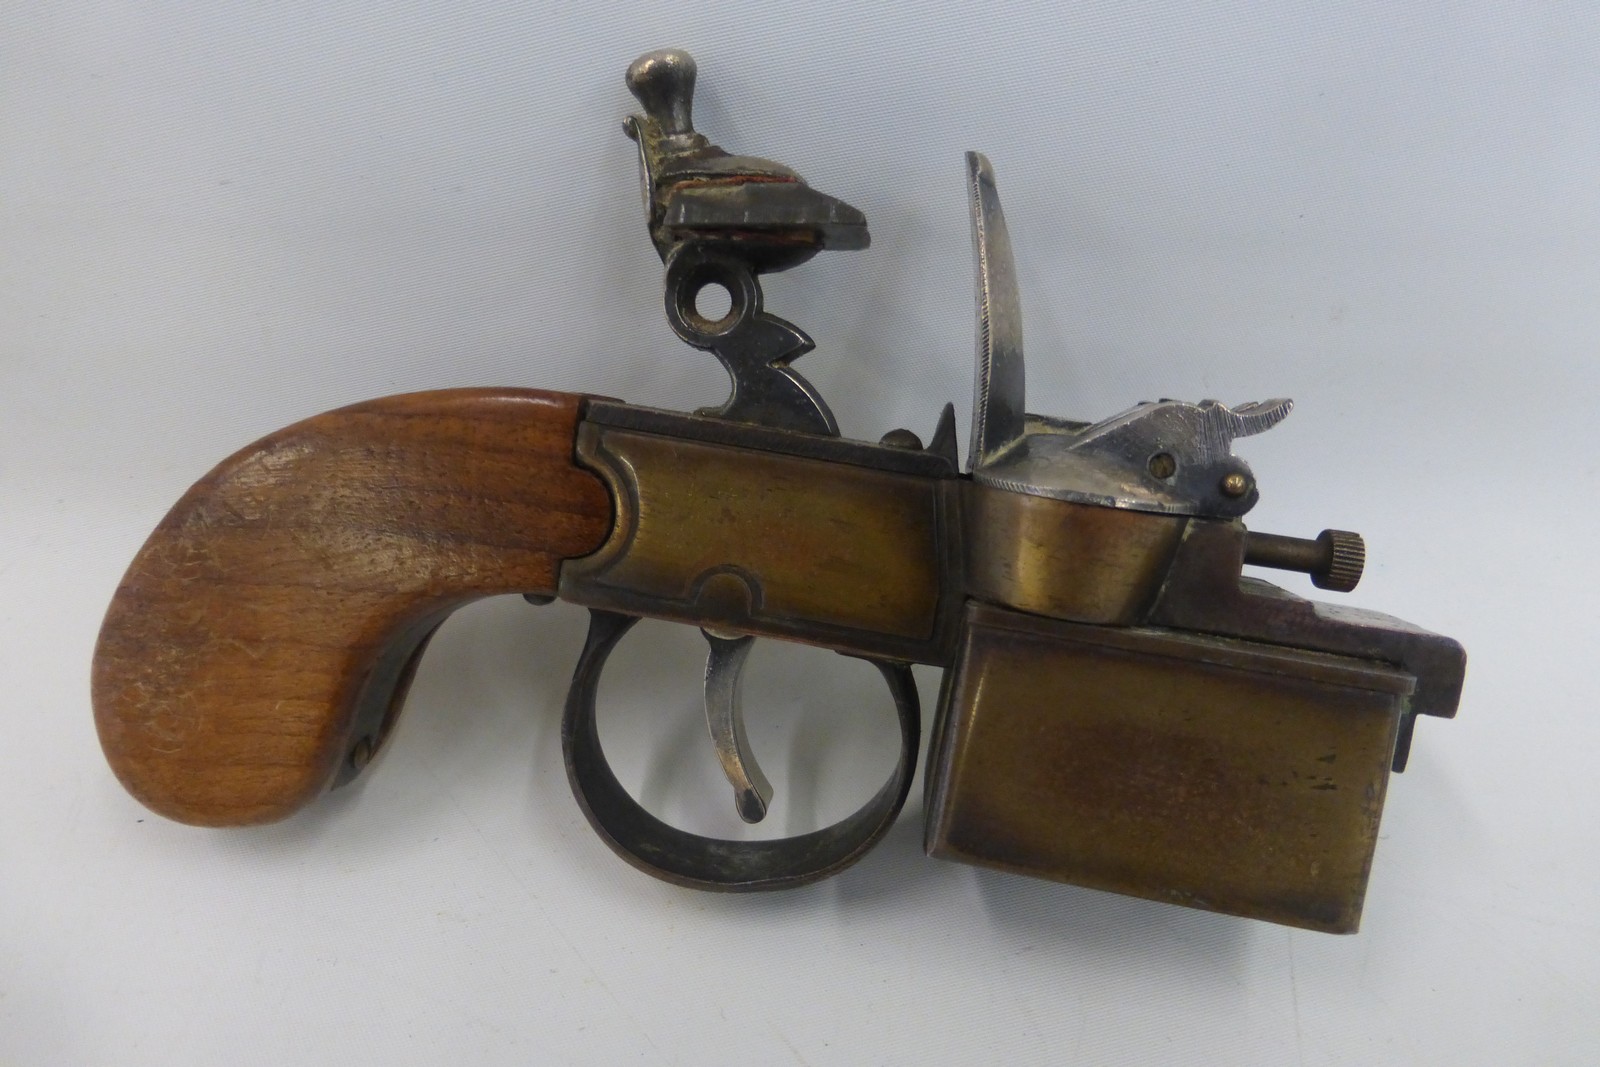 A Dunhill tinder pistol lighter.